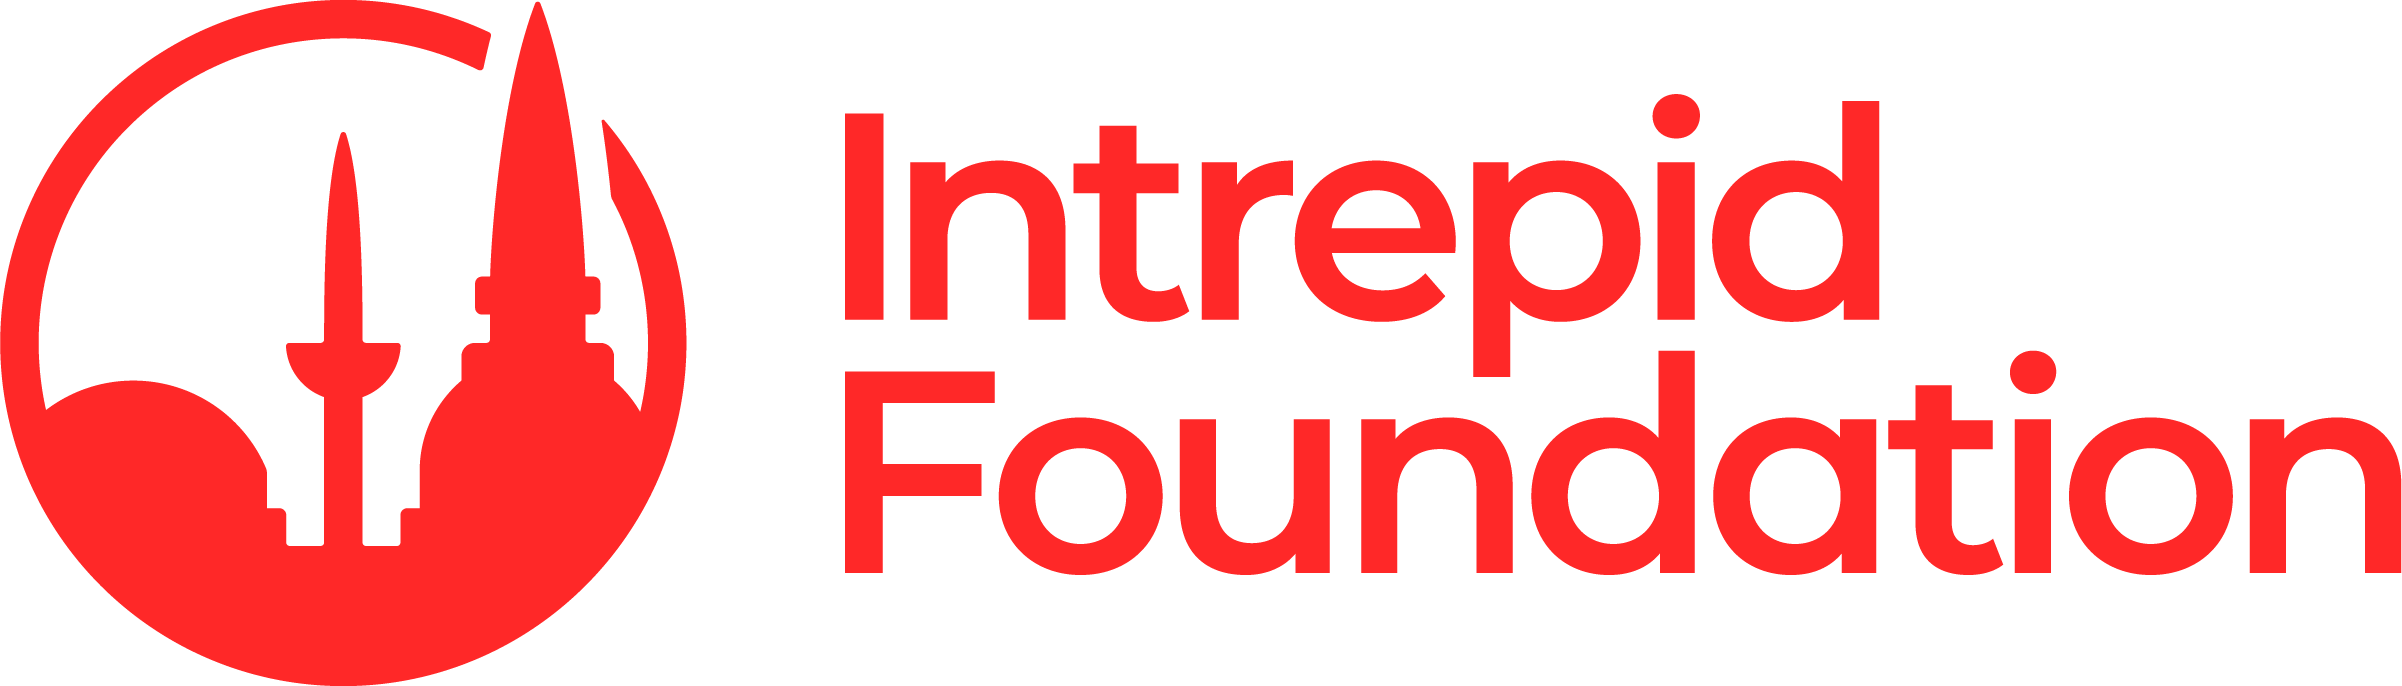 Intrepid foundation